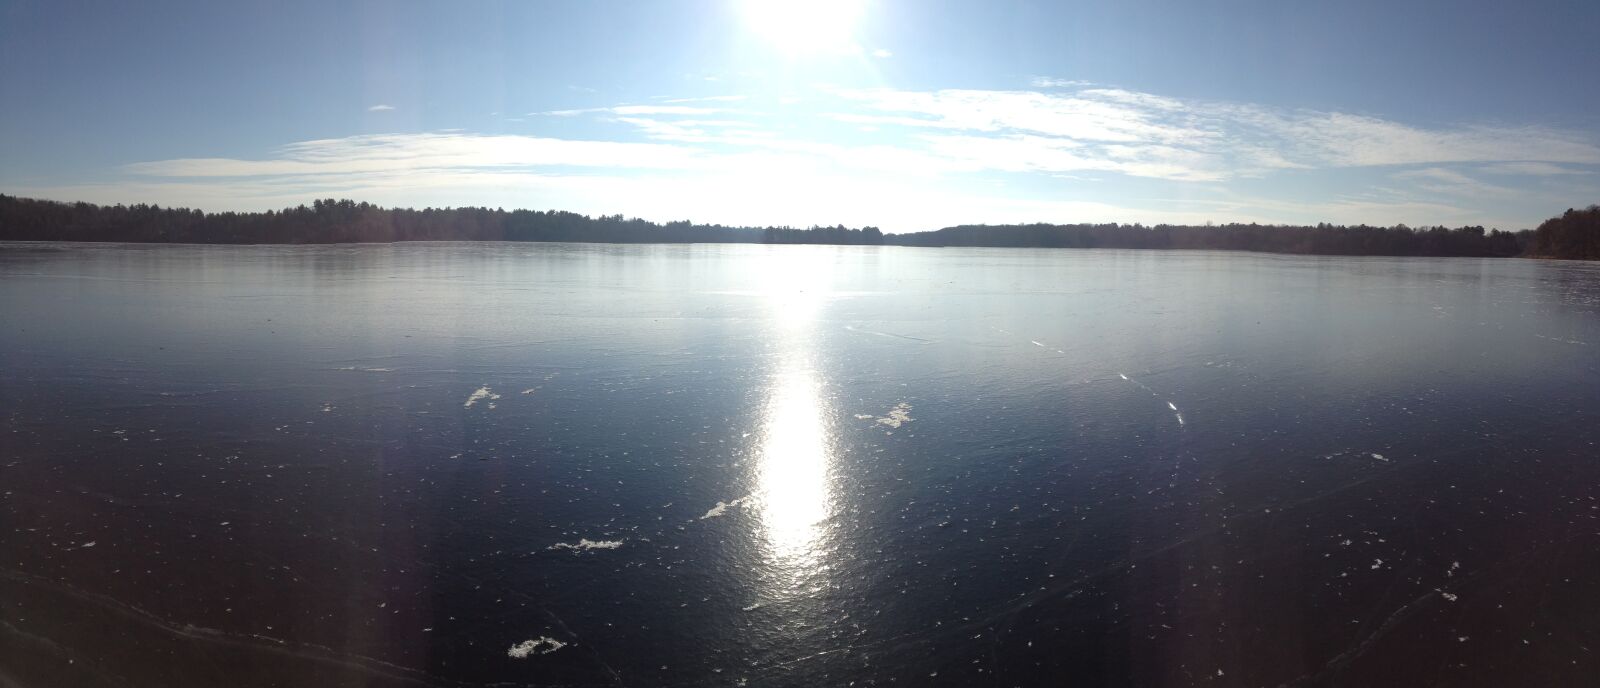 Apple iPhone 4S sample photo. Frozen lake, scenic, landscape photography